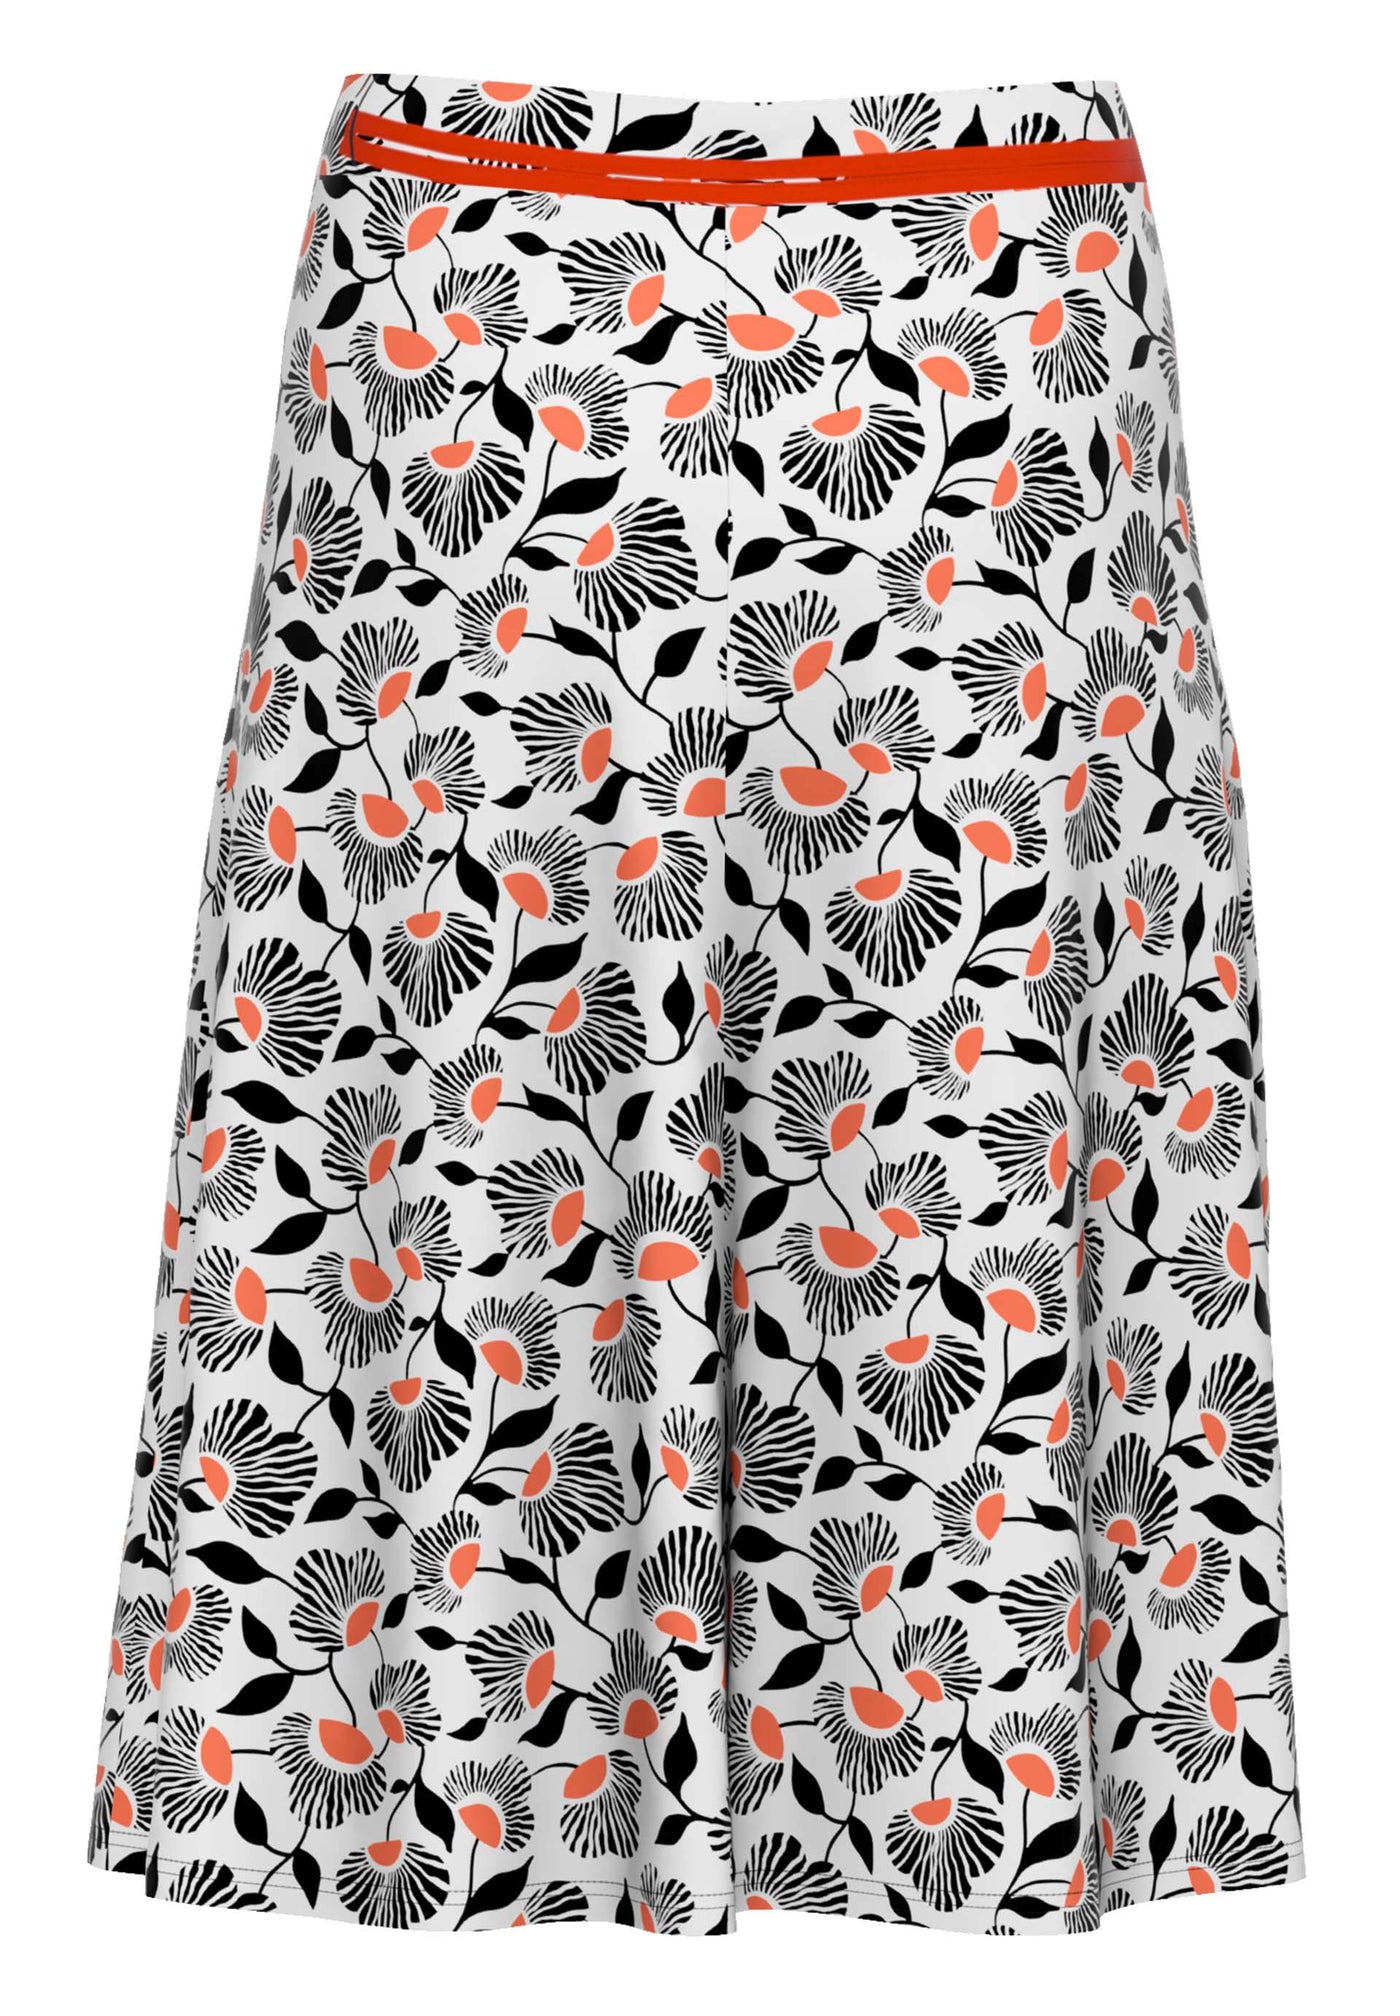 Dandelion Print Skirt with Coral Belt